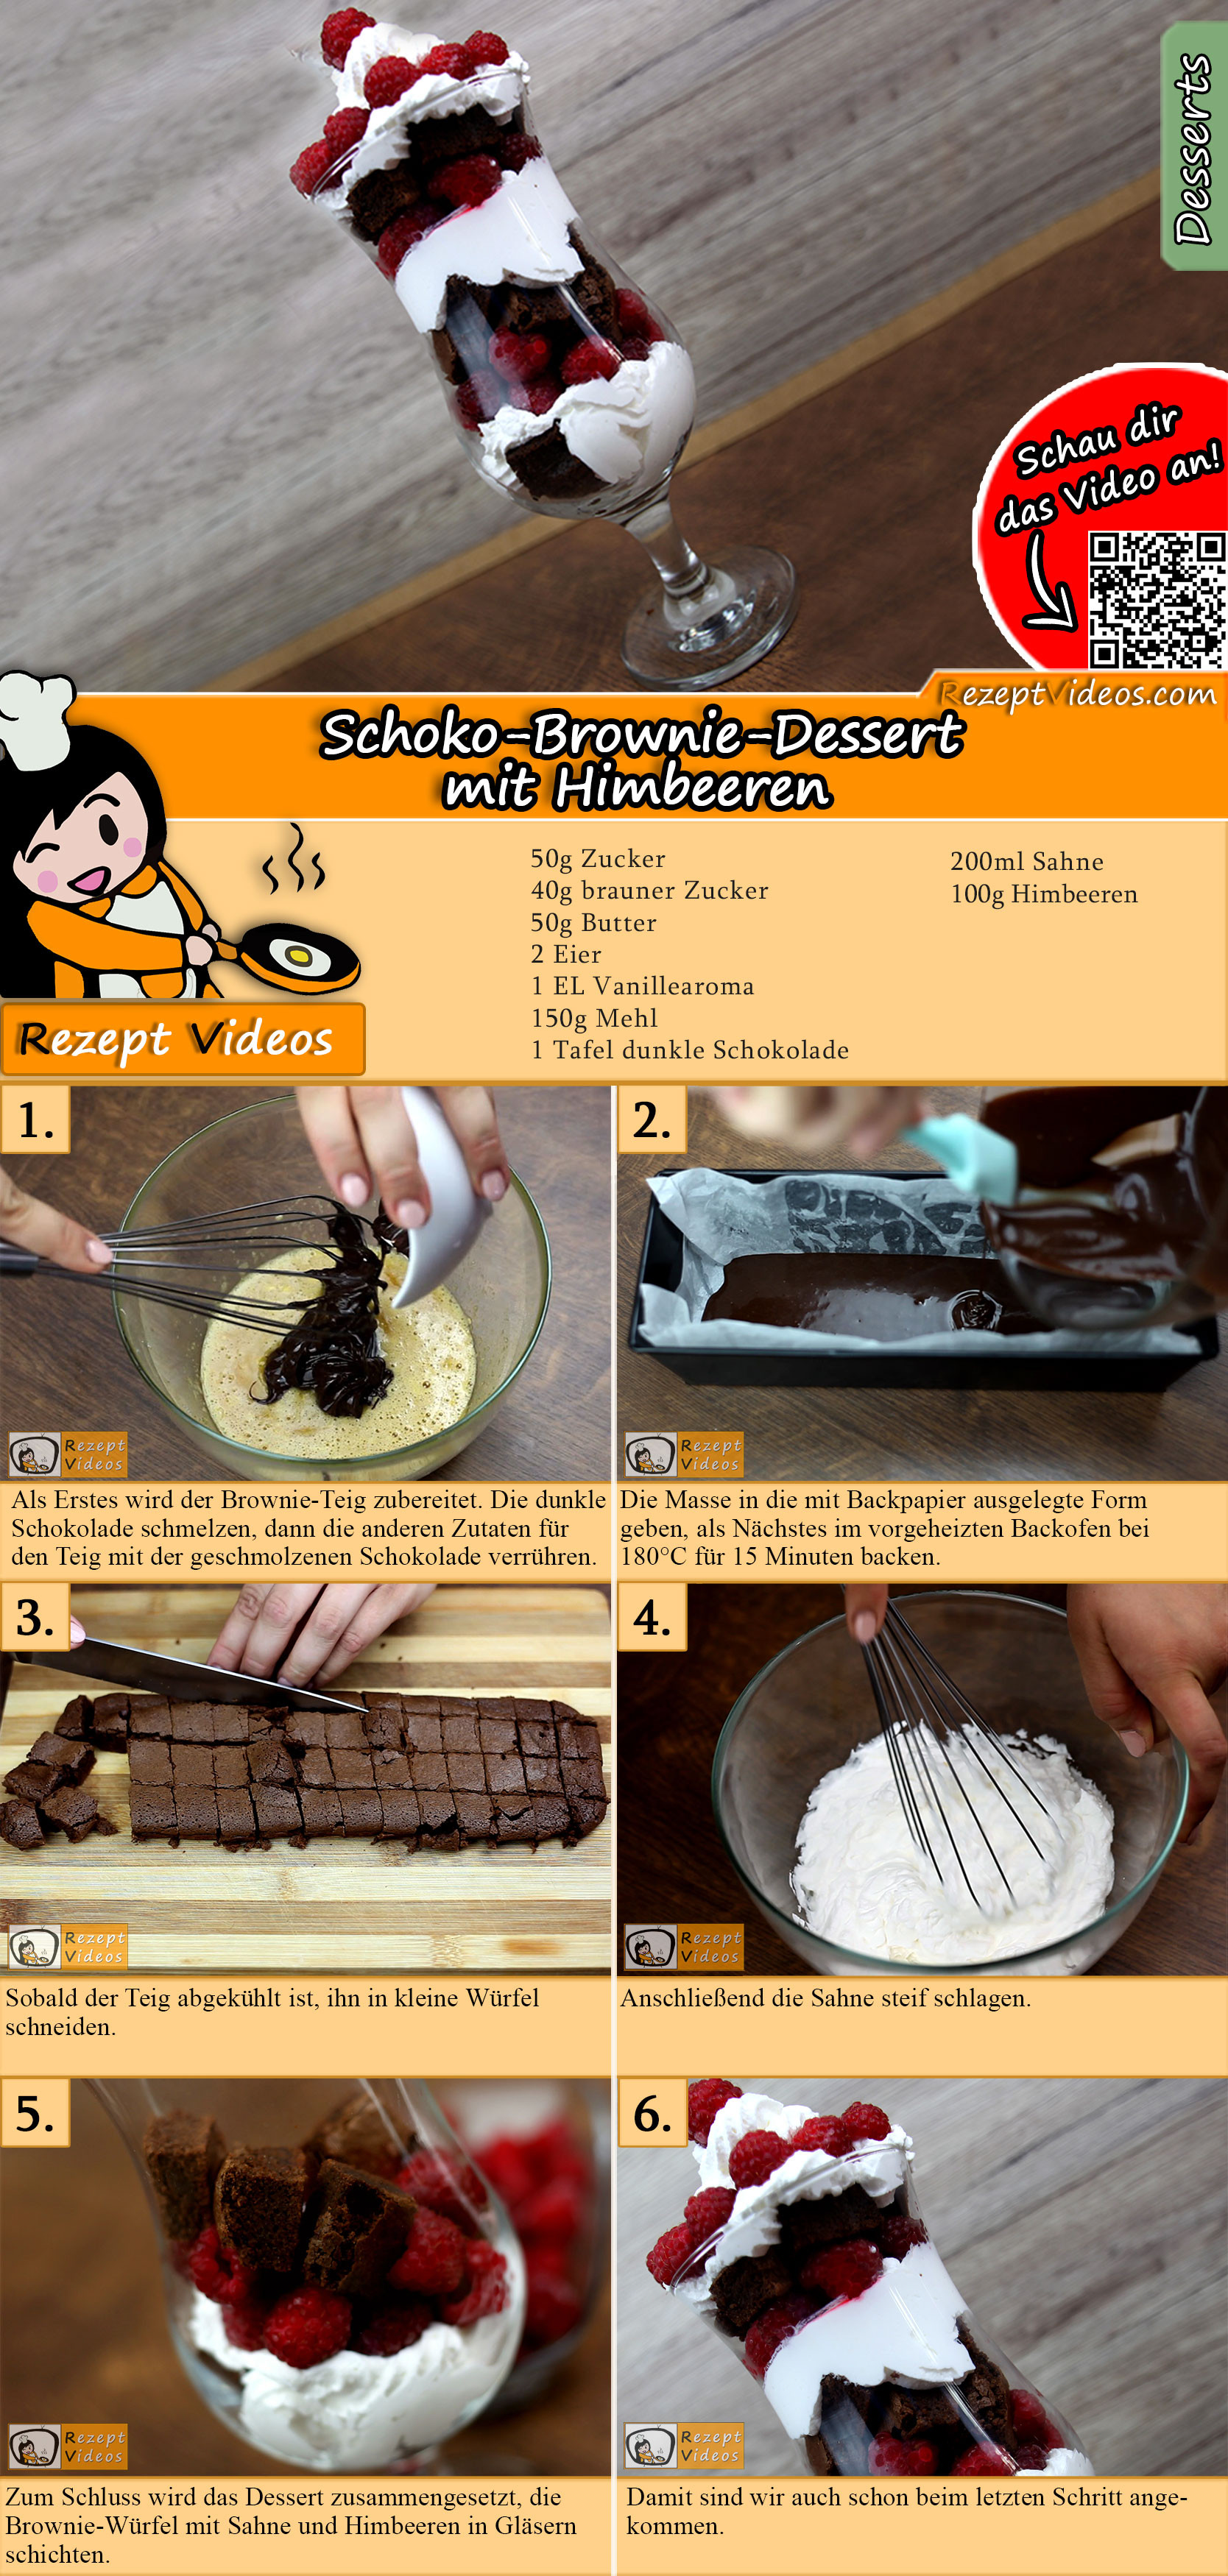 Schoko-Brownie-Dessert mit Himbeeren Rezept mit Video